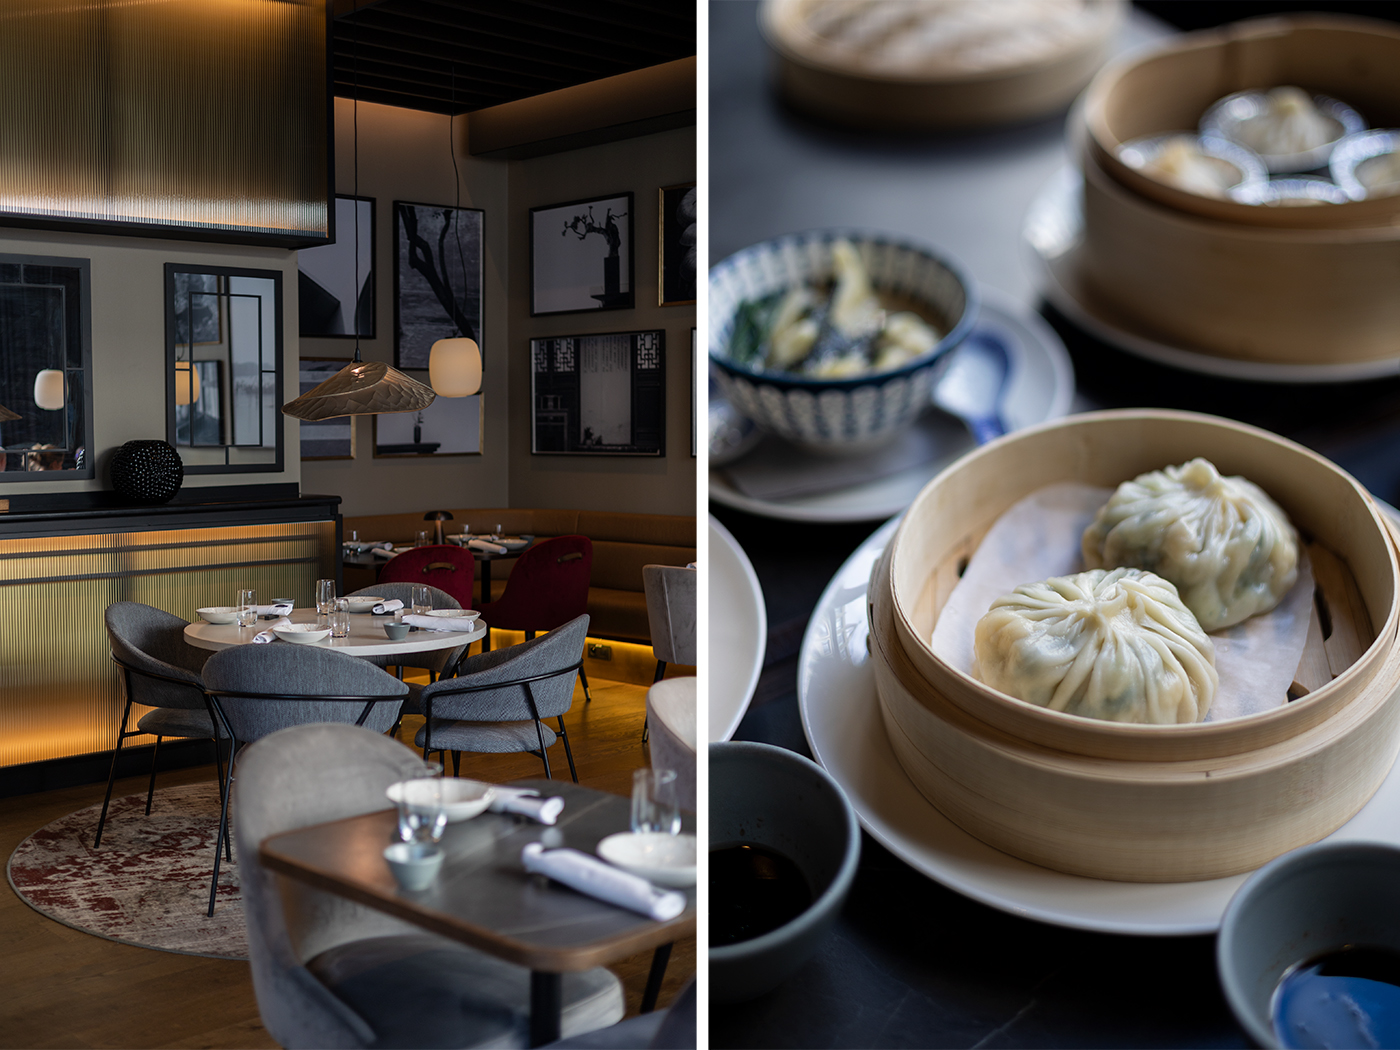 Shanghai Kitchen Brussels Chinese Food Restaurant Dumplings Dimsum New Hotspot Foodie 04 